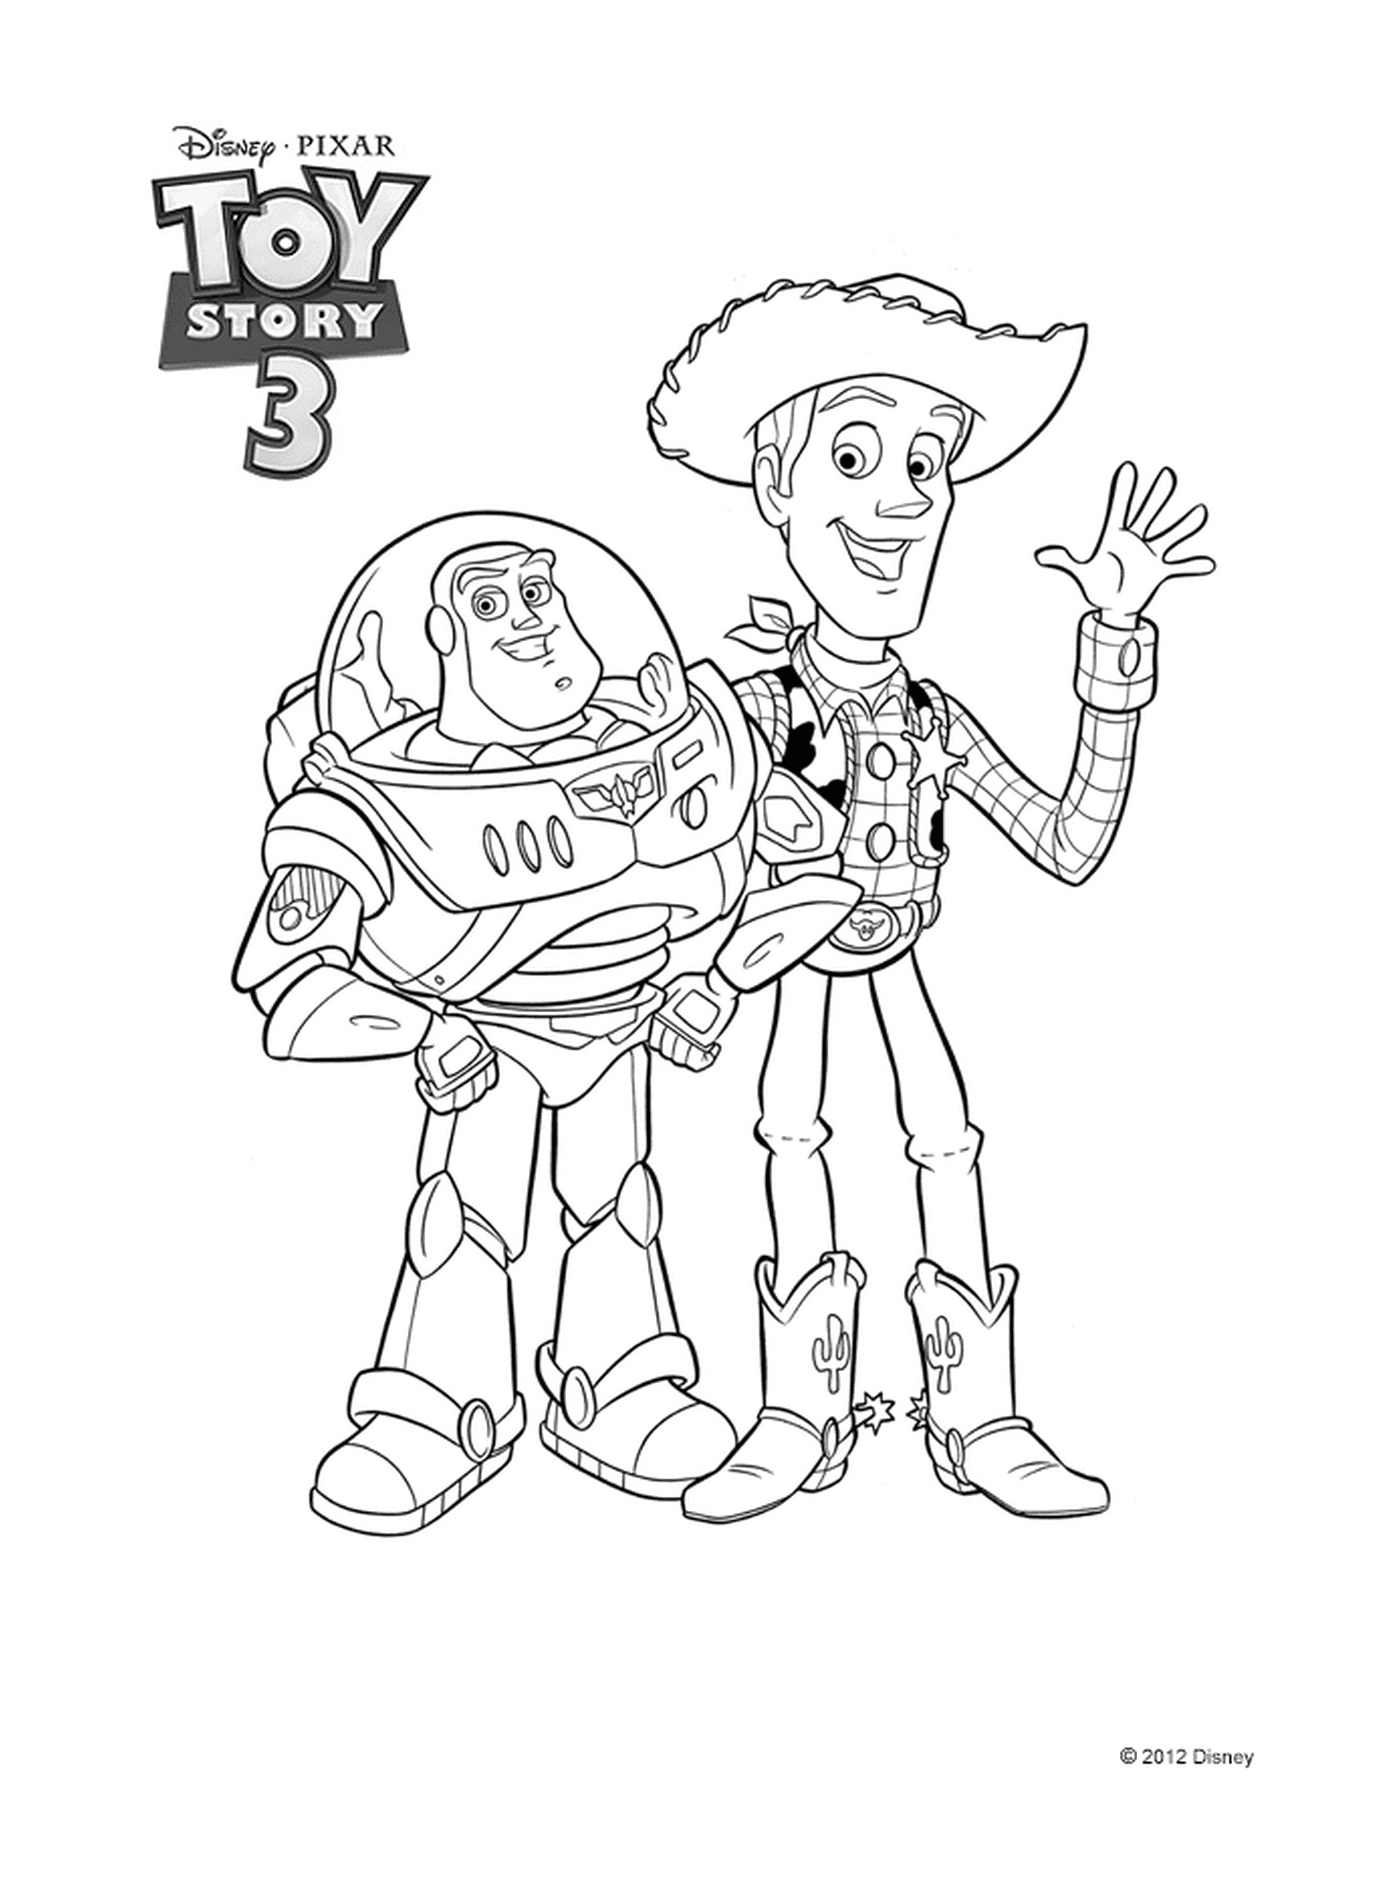  Toy Story 3, aventura com Buzz e Woody 